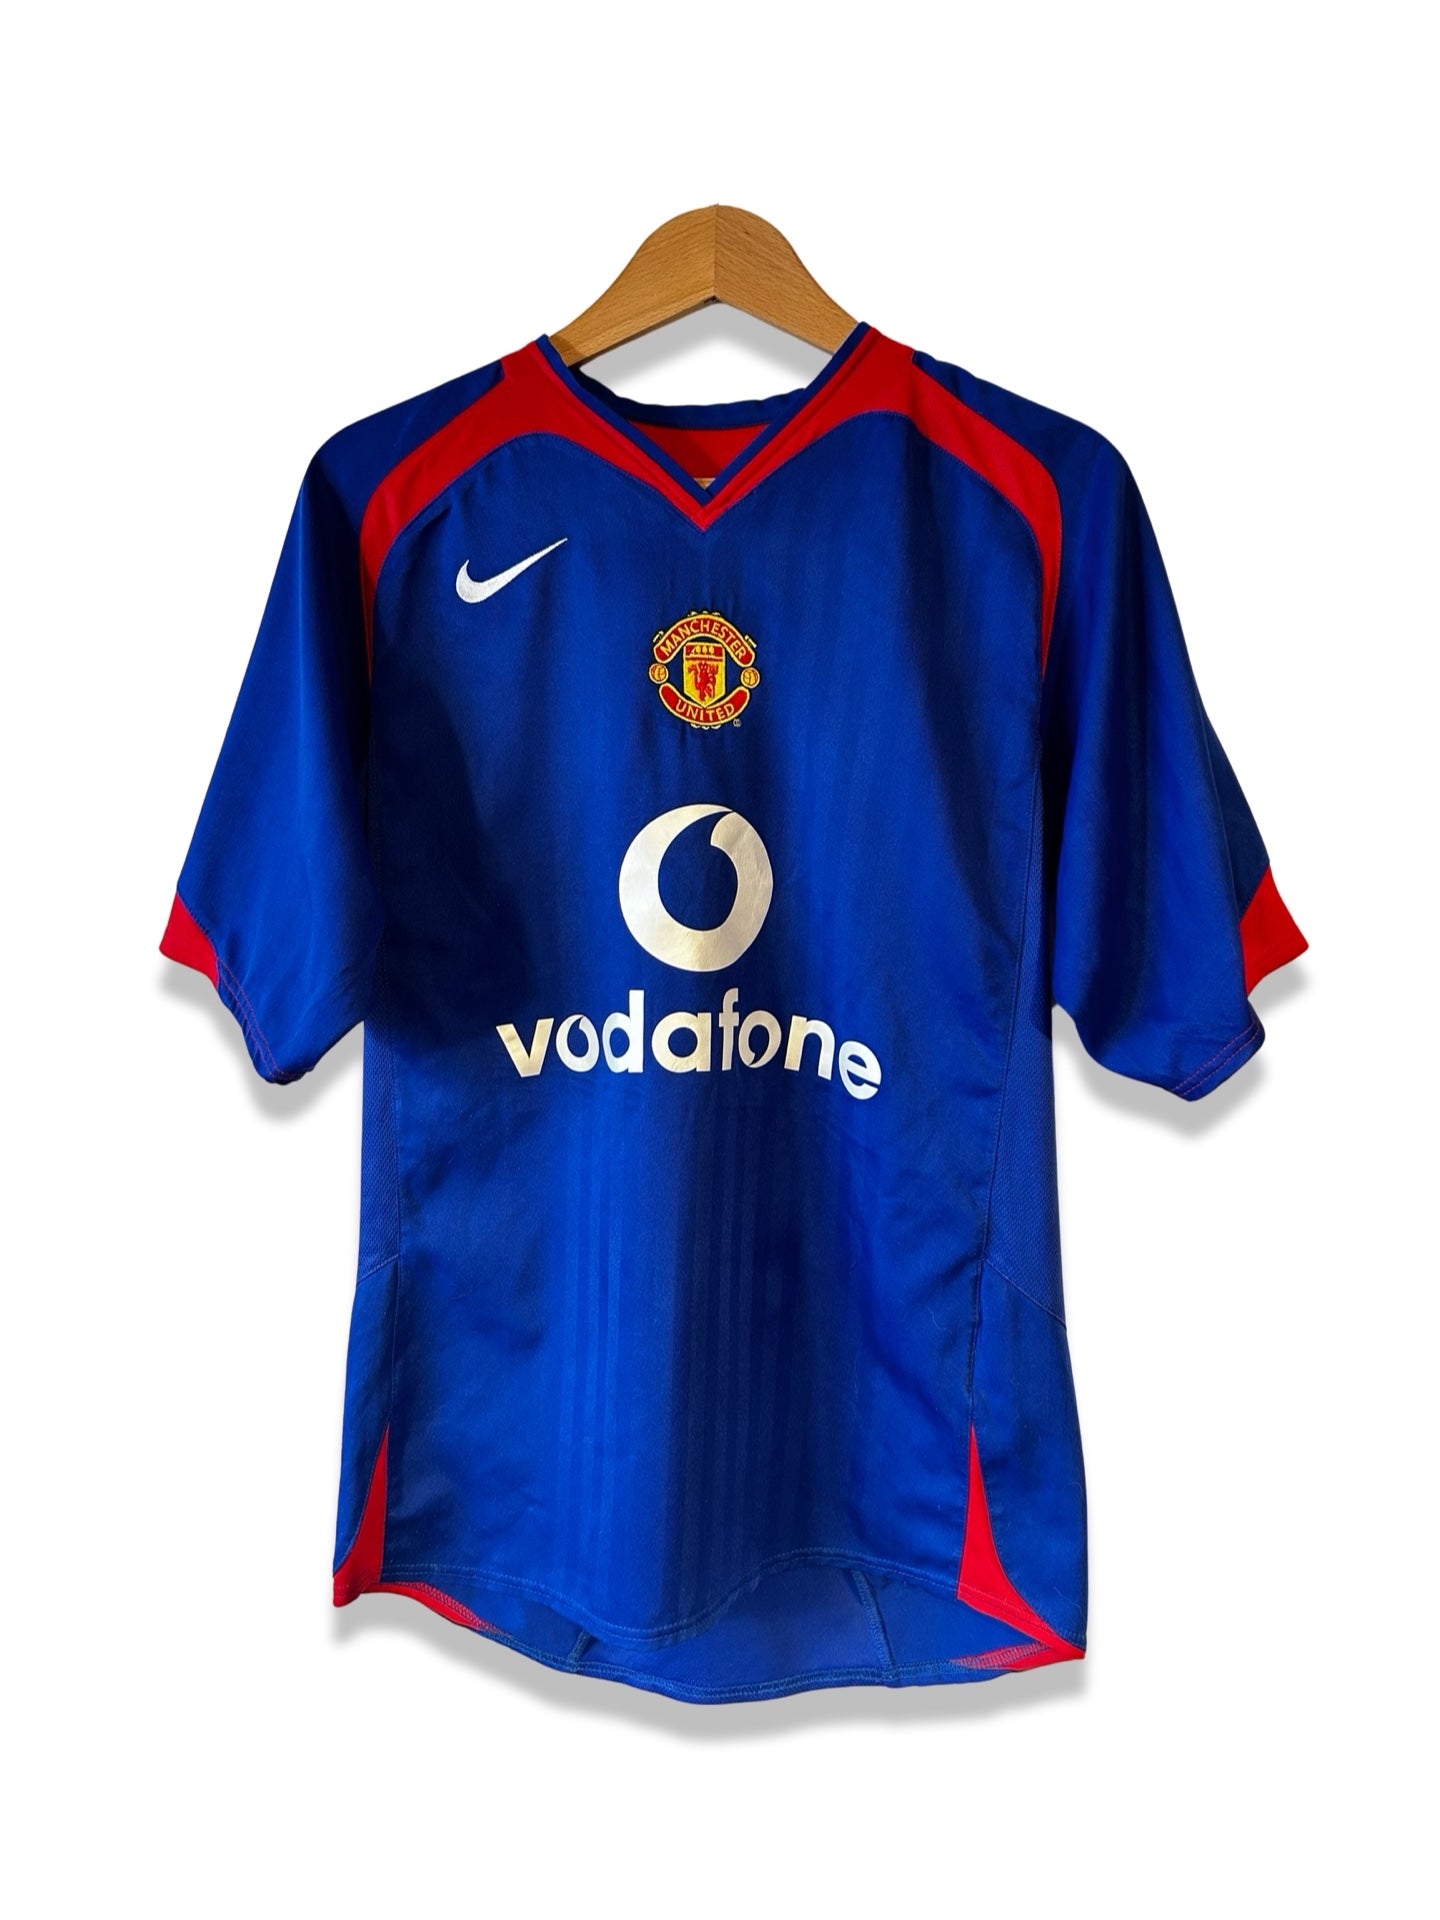 Manchester United 2005-06 Away Shirt, #7 Cristiano Ronaldo - S